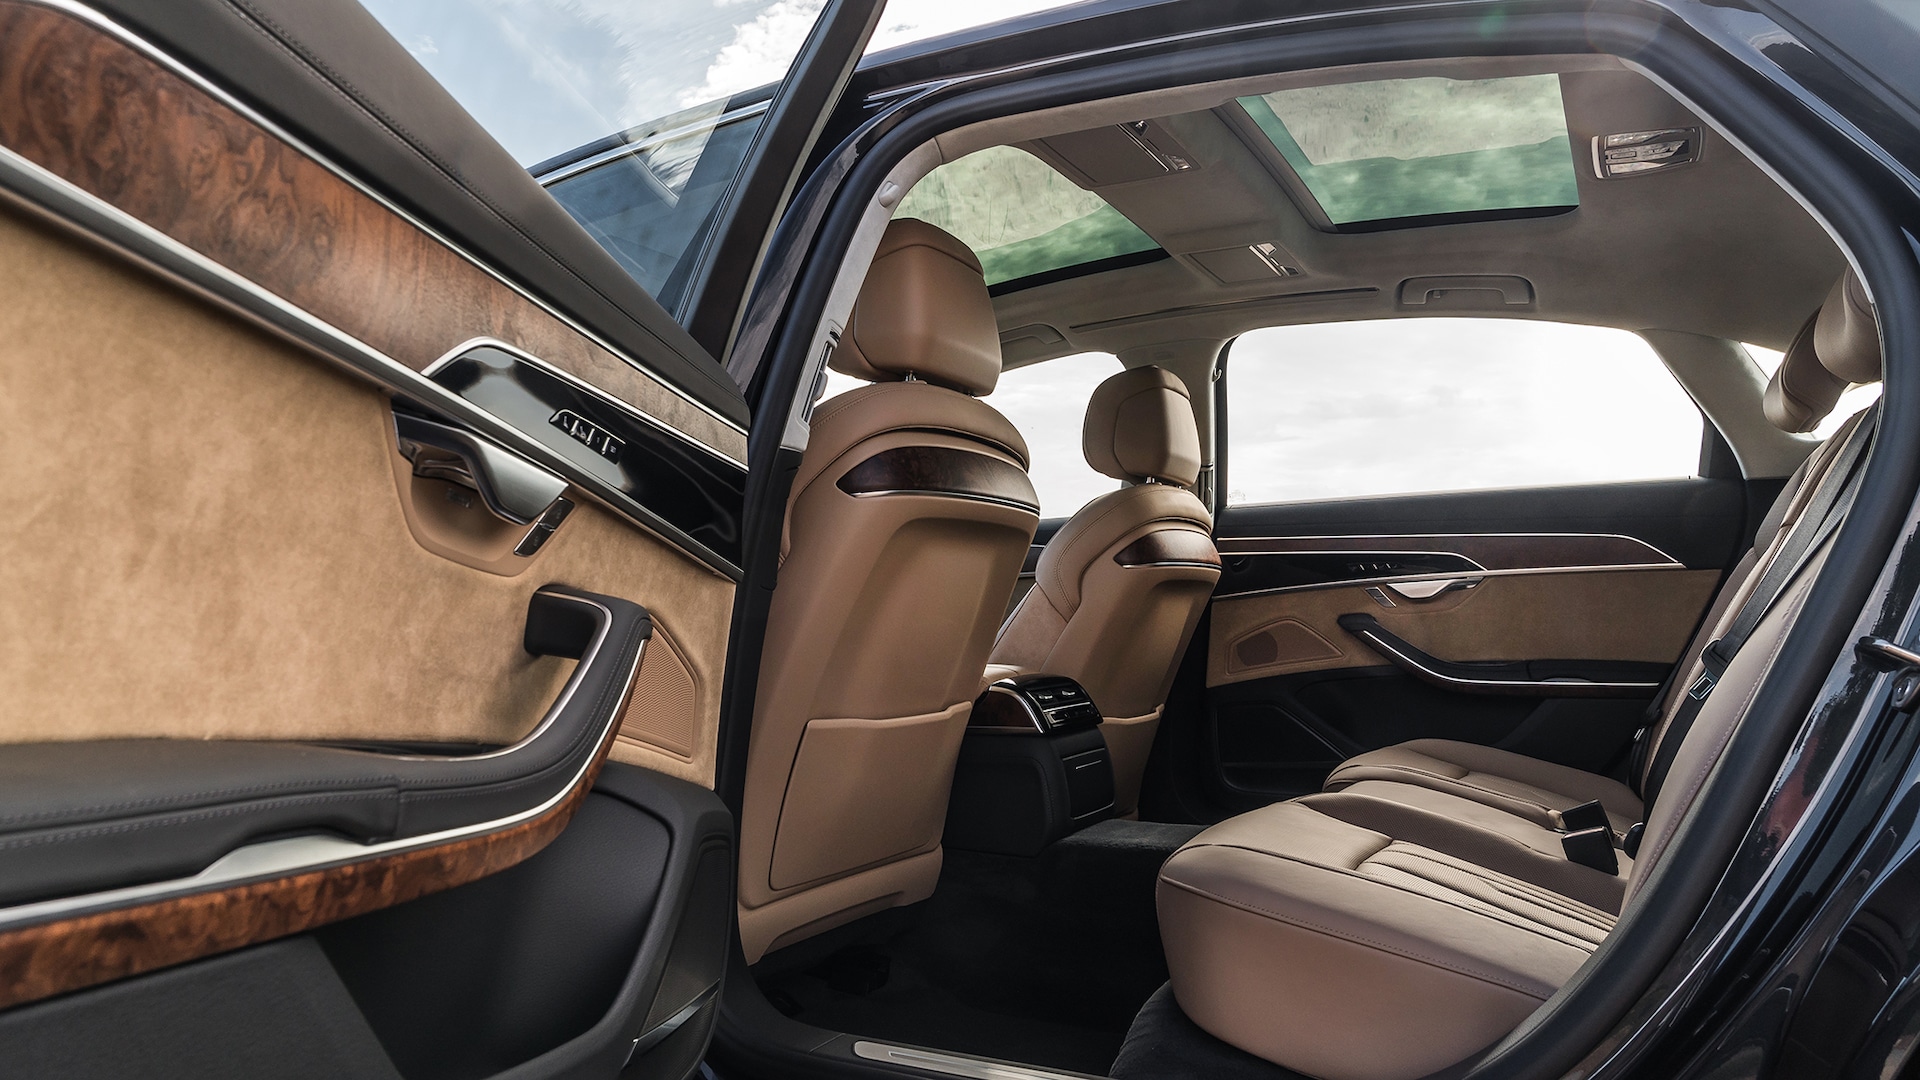 2019 Audi A8 L Review: High-Tech Luxury